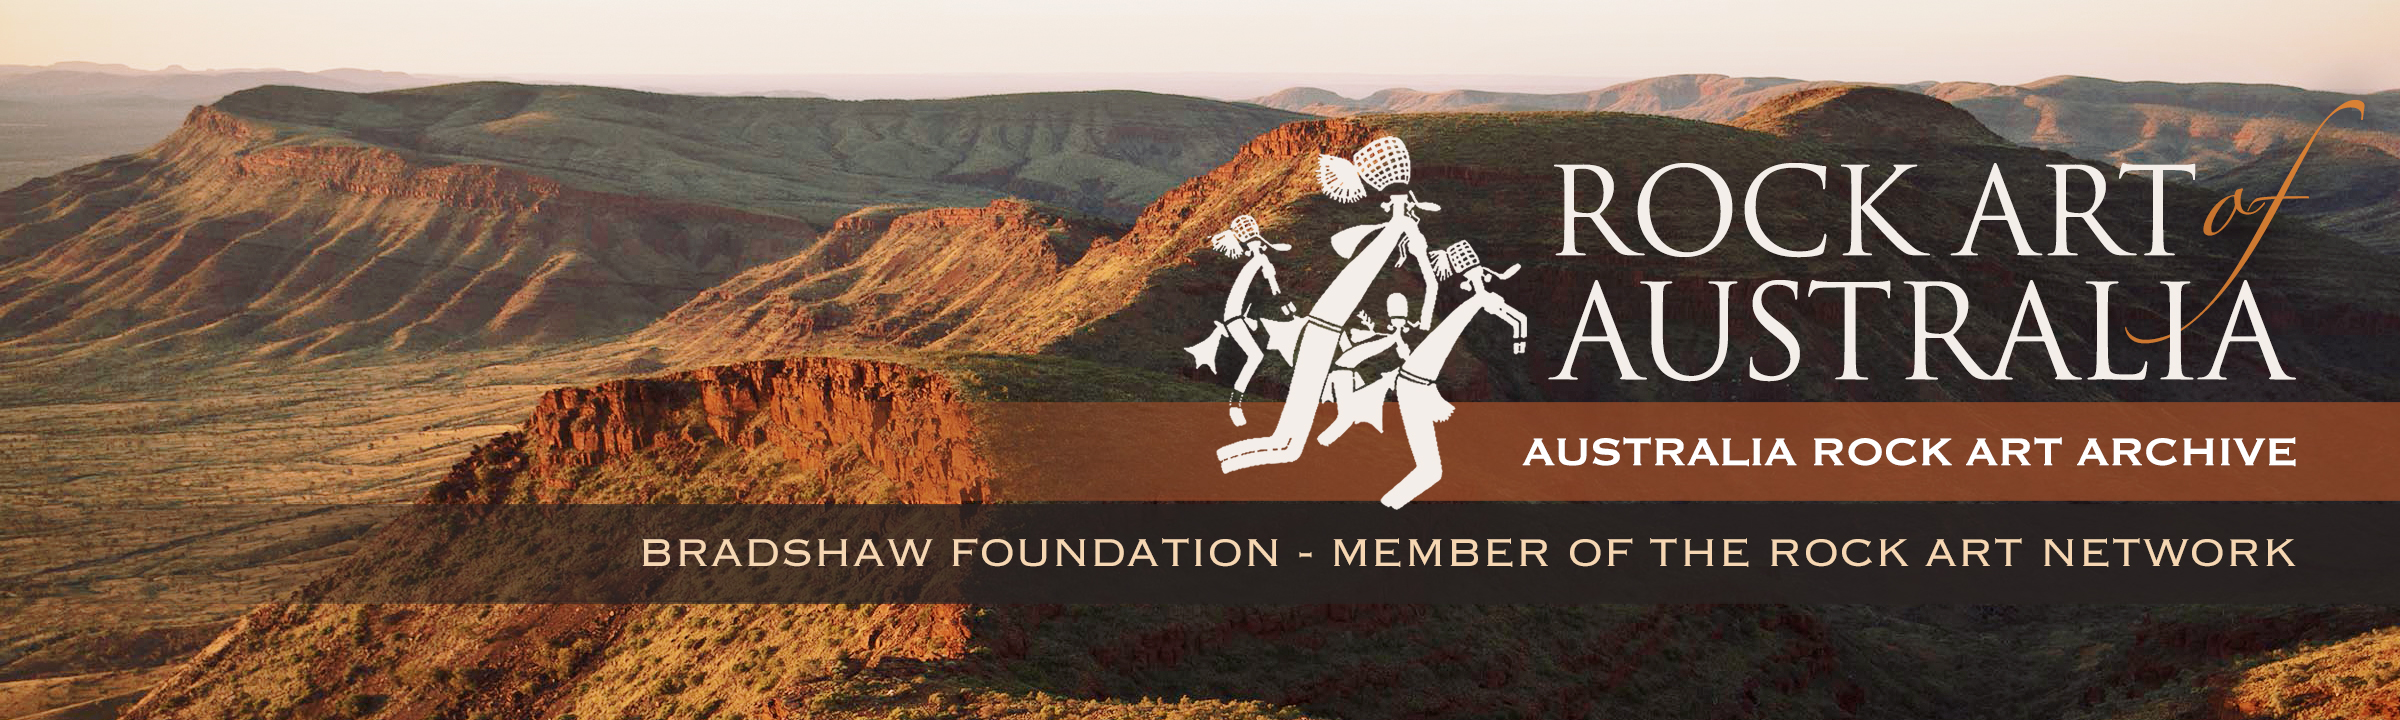 Australian Rock Art Archive Bradshaw Foundation